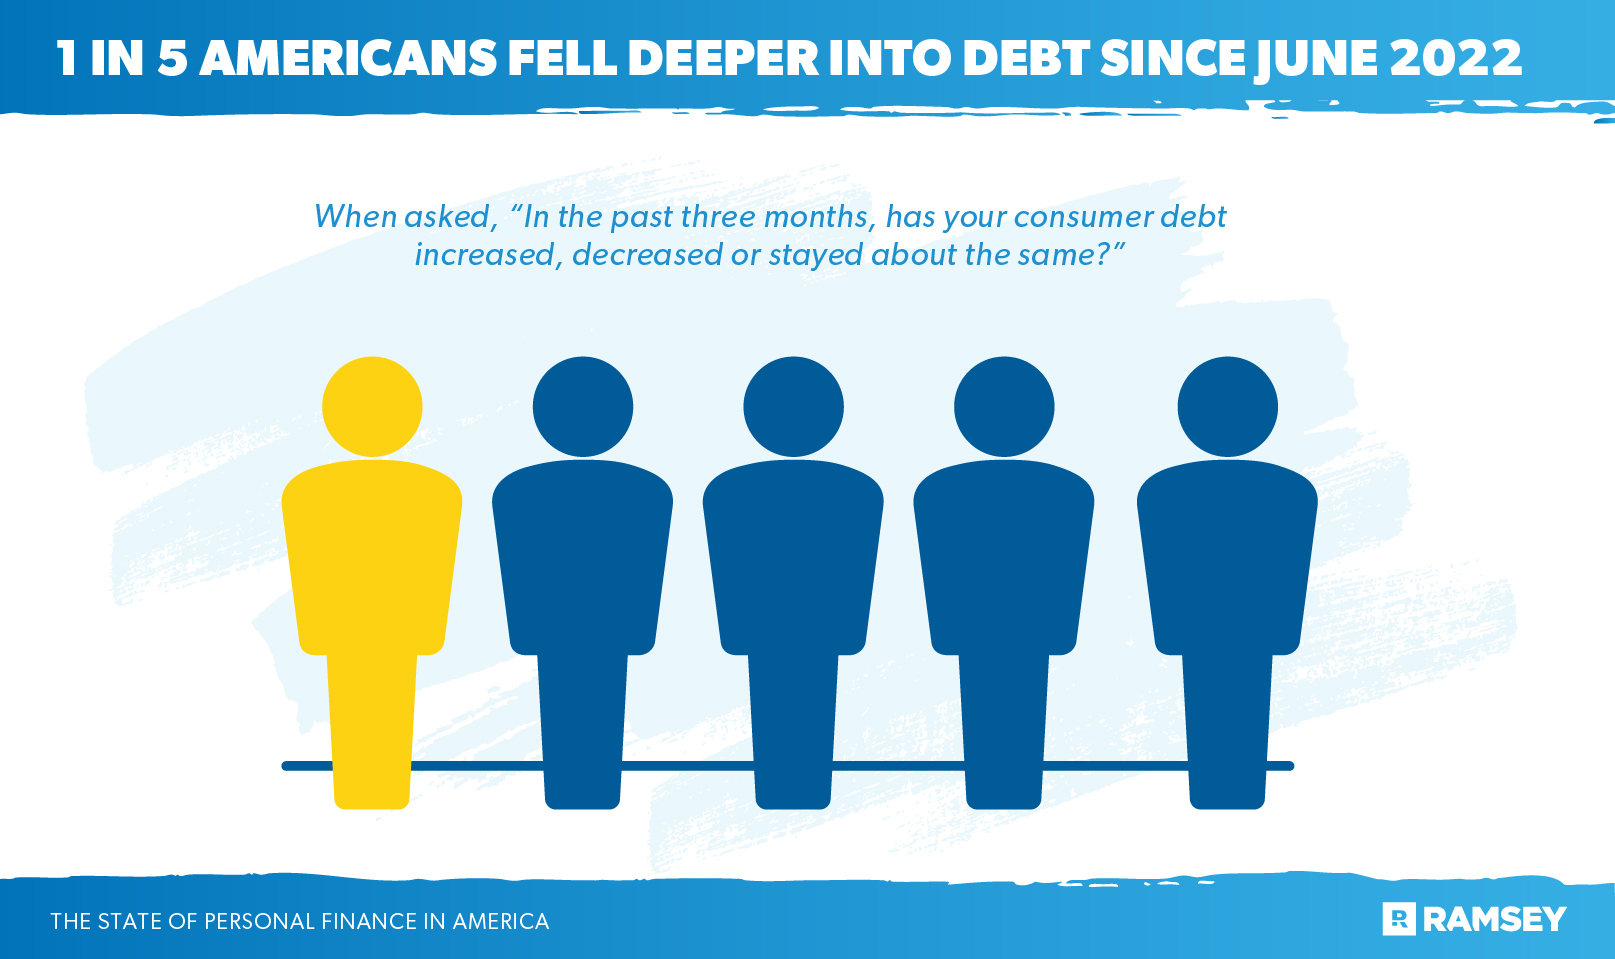 1 in 5 Americans fell deeper into debt since June 2022